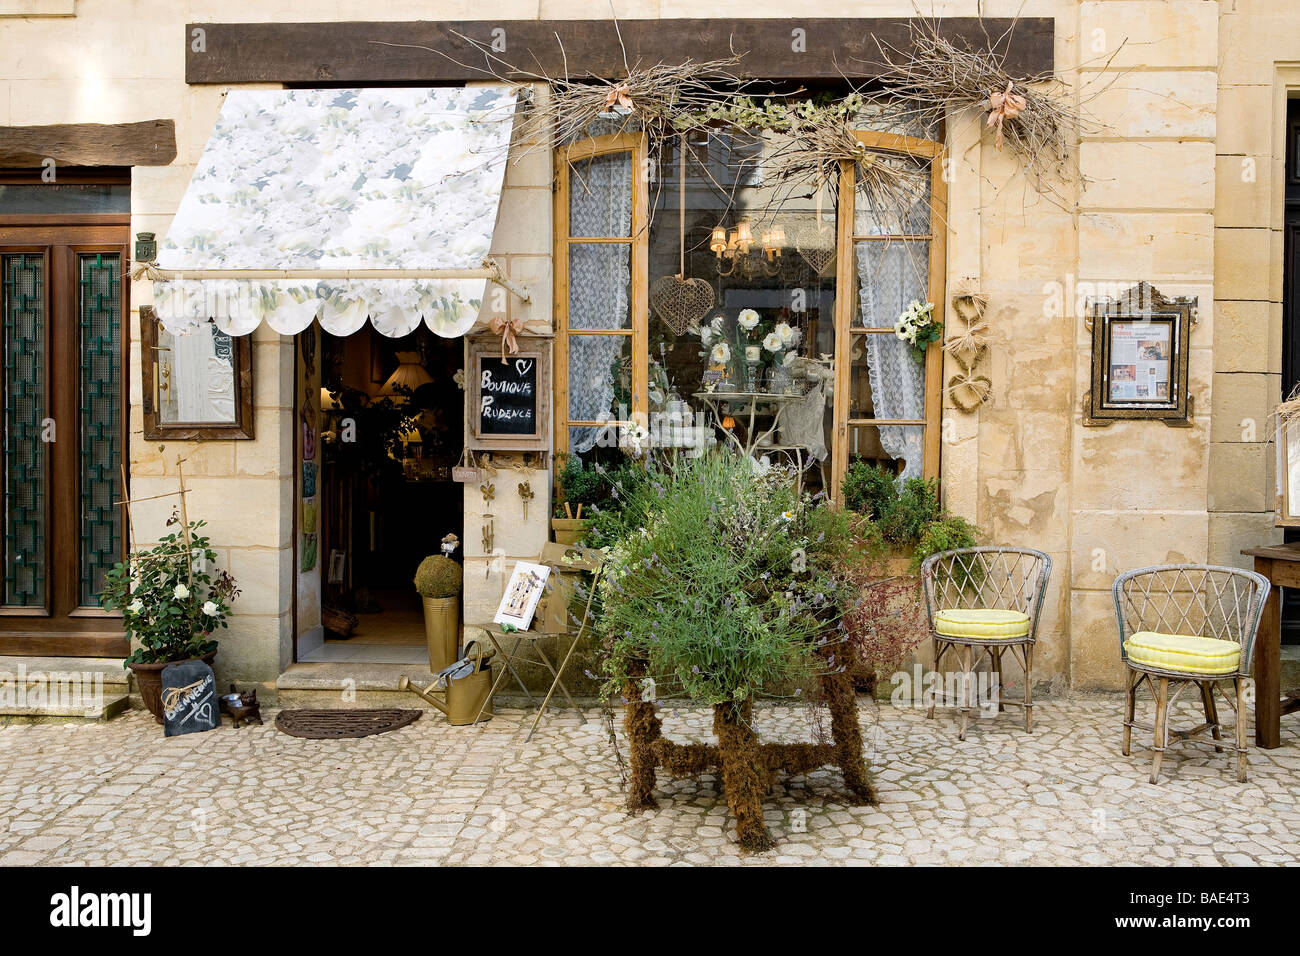 France, Dordogne, Perigord Pourpre, Beaumont du Perigord, Prudence perfumer shop in Rue Ratier Stock Photo